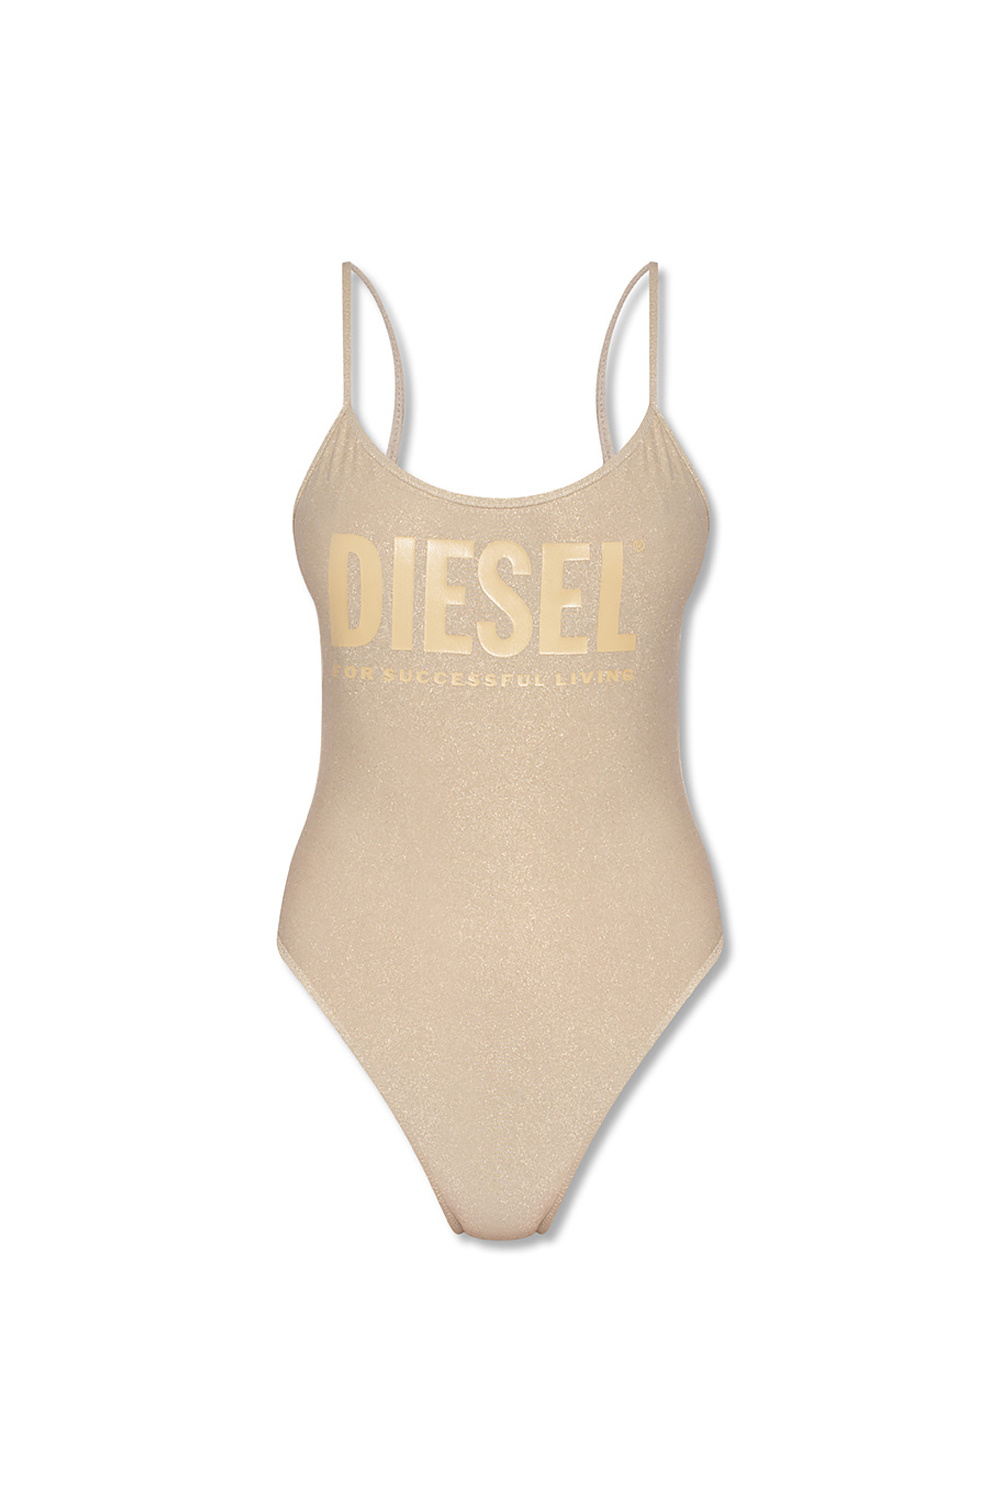 Diesel ‘Bfsw-Gretel’ one-piece swimsuit